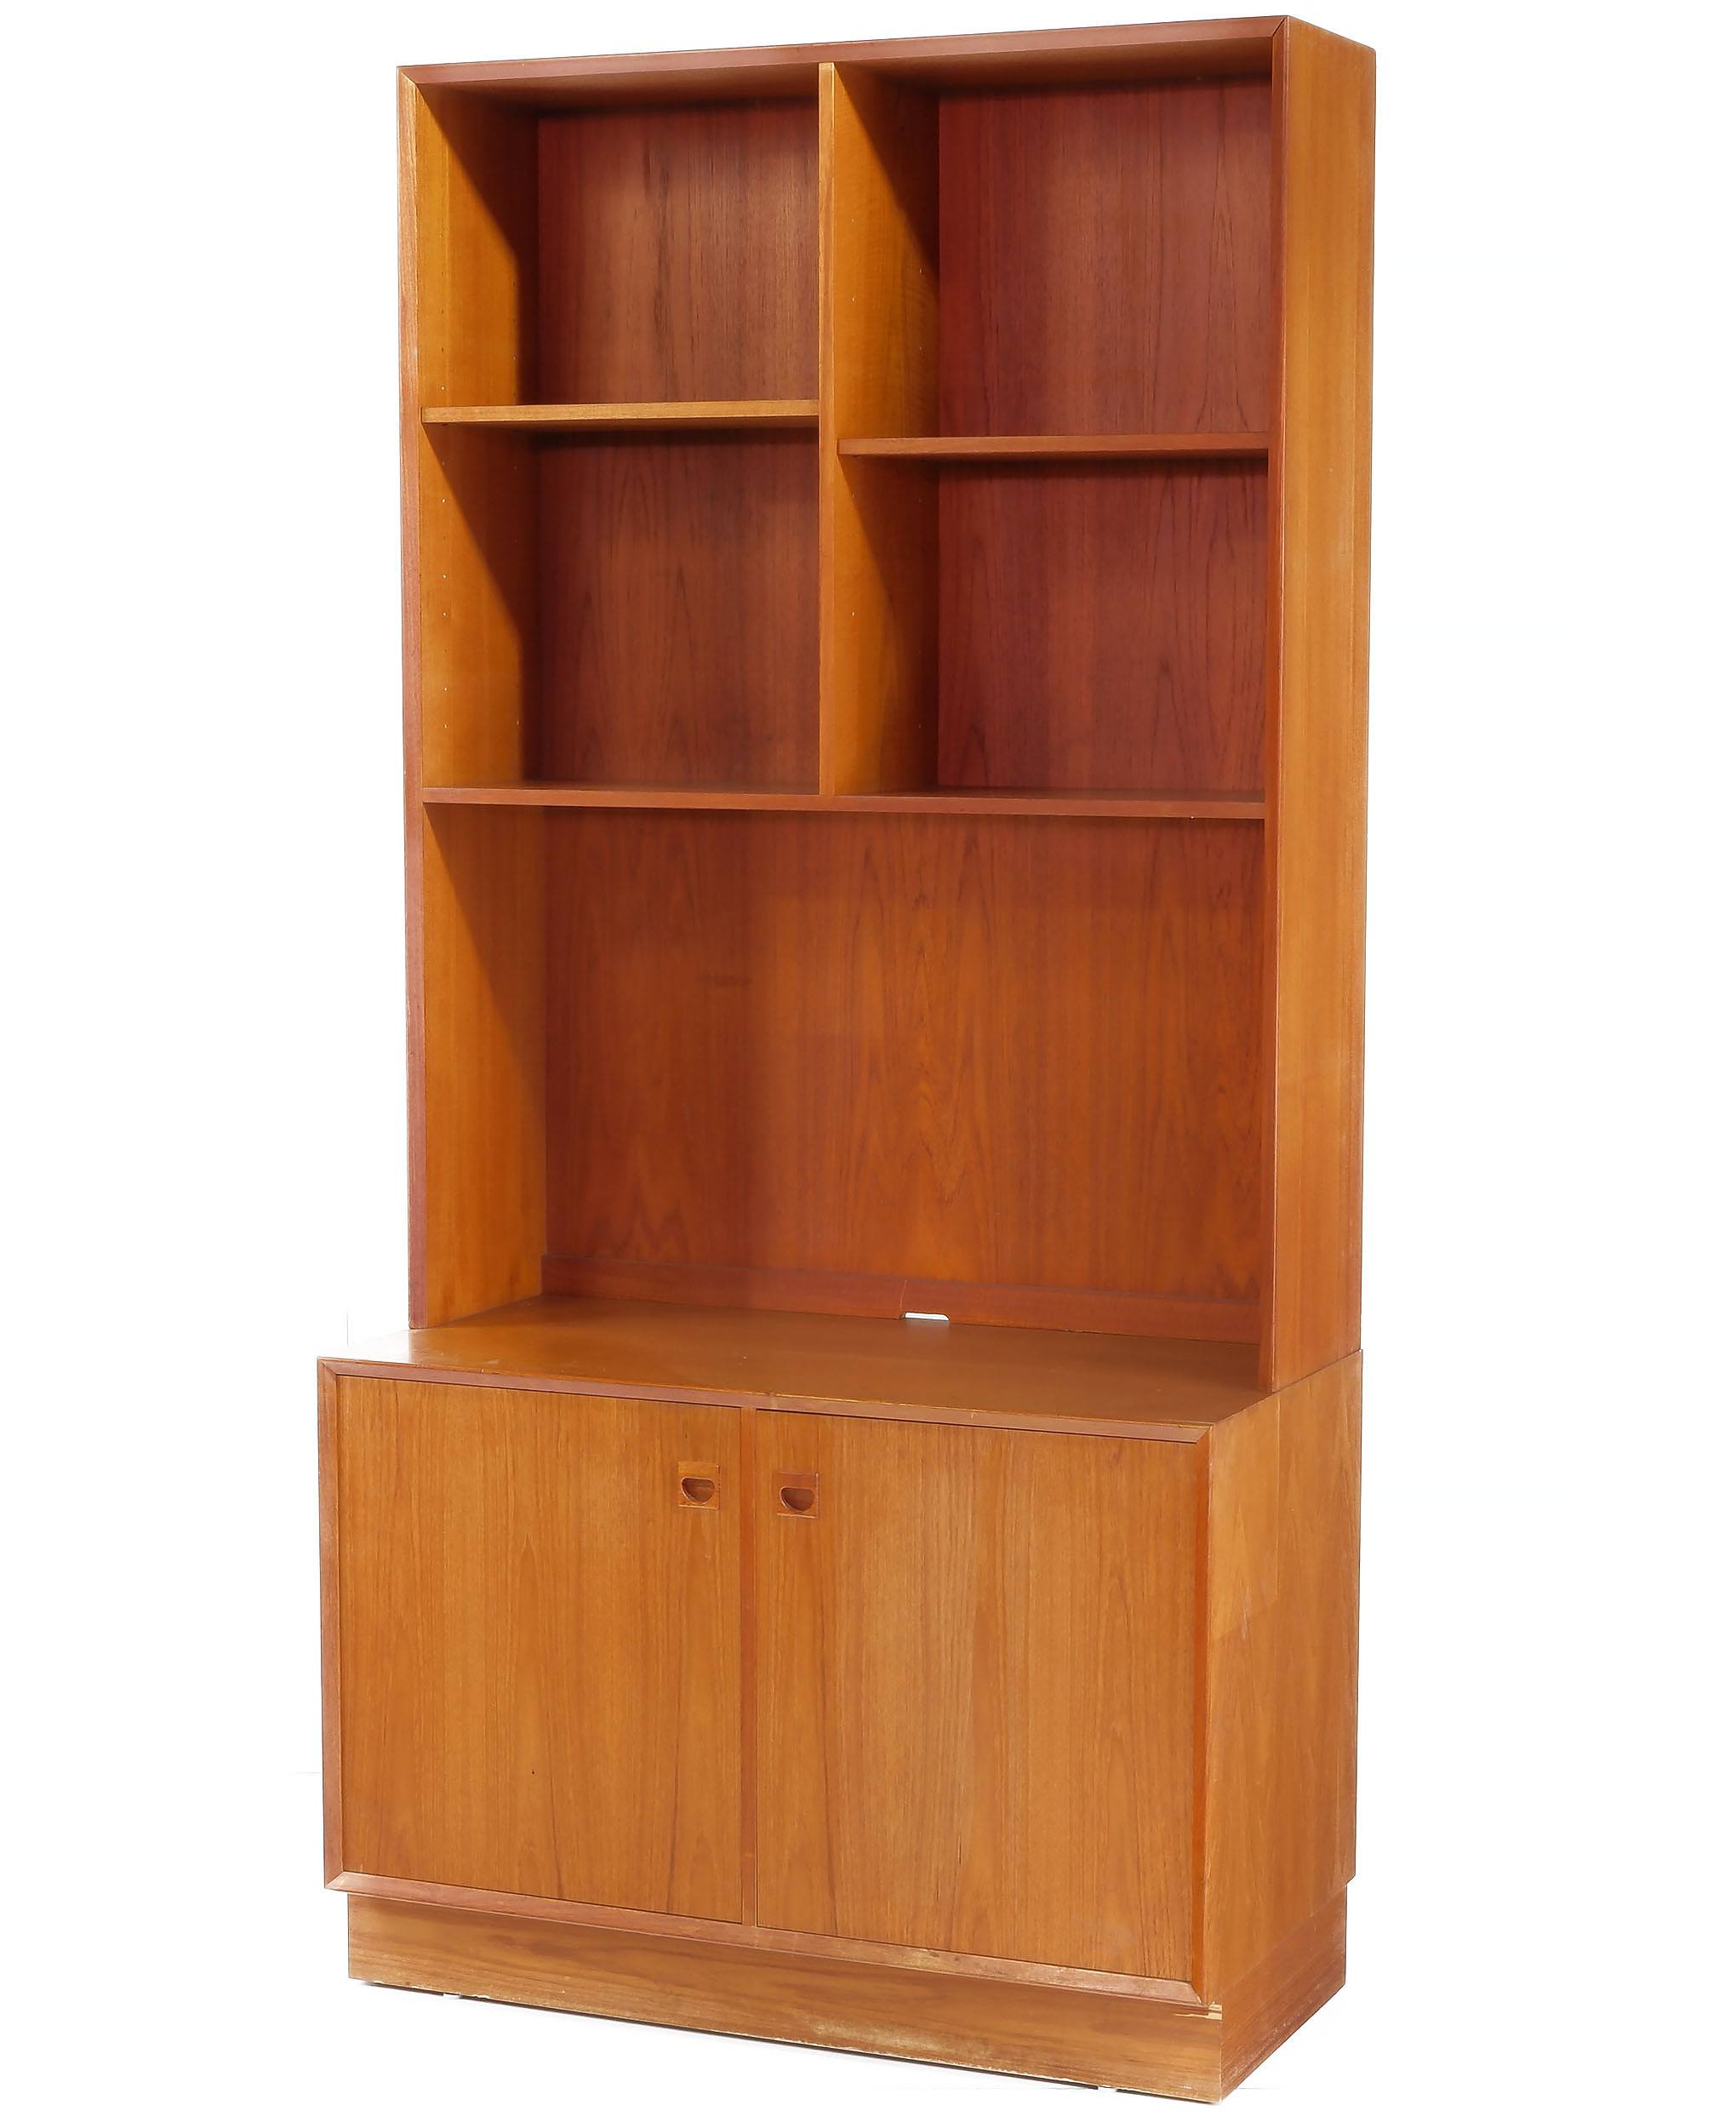 'Brouer Mobelfabrik Denmark Teak Bookcase Cabinet Designed by Erik Brouer'